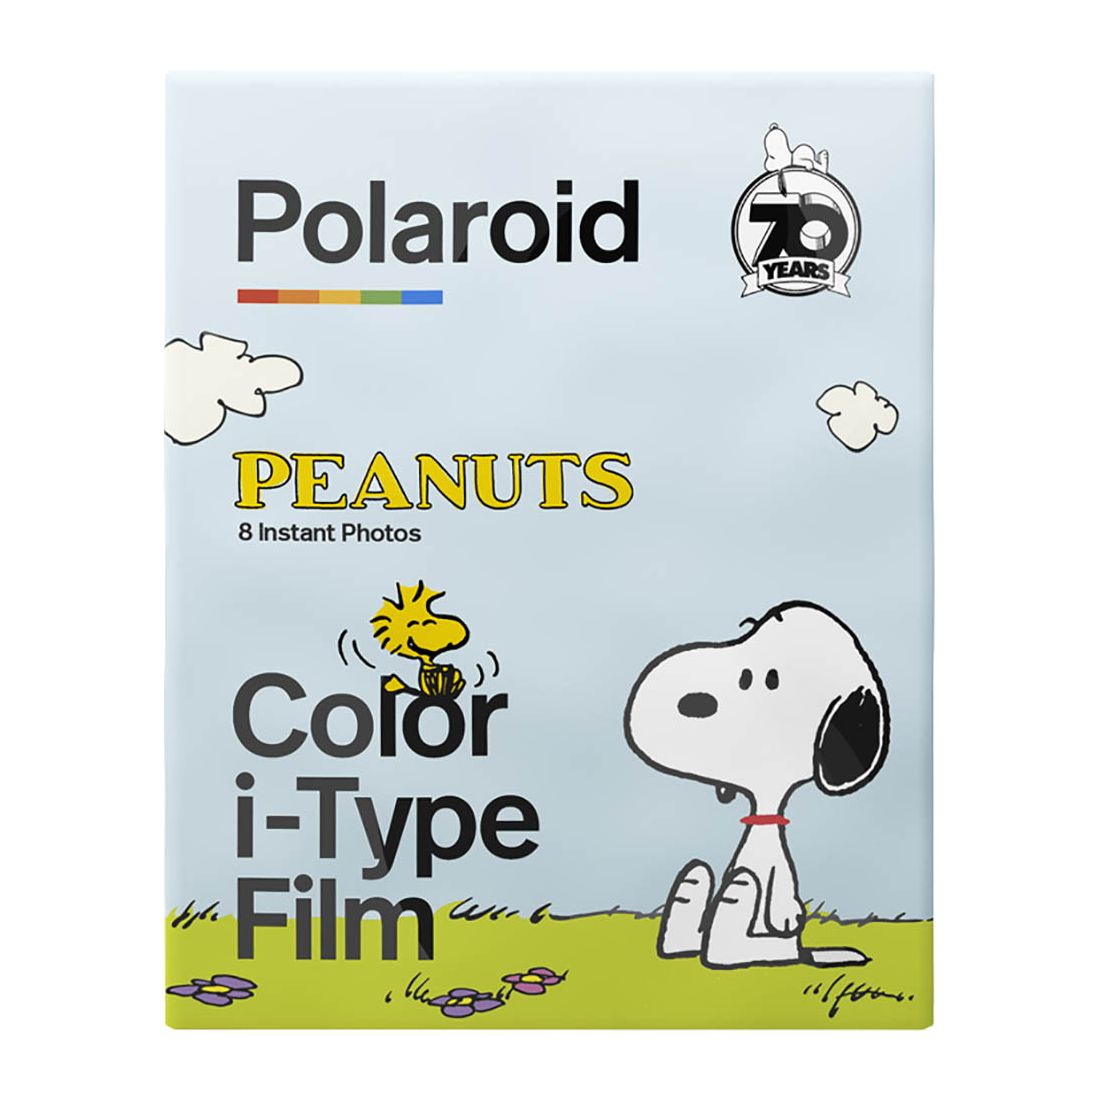 Polaroid Color Film for I Type Peanuts Edition